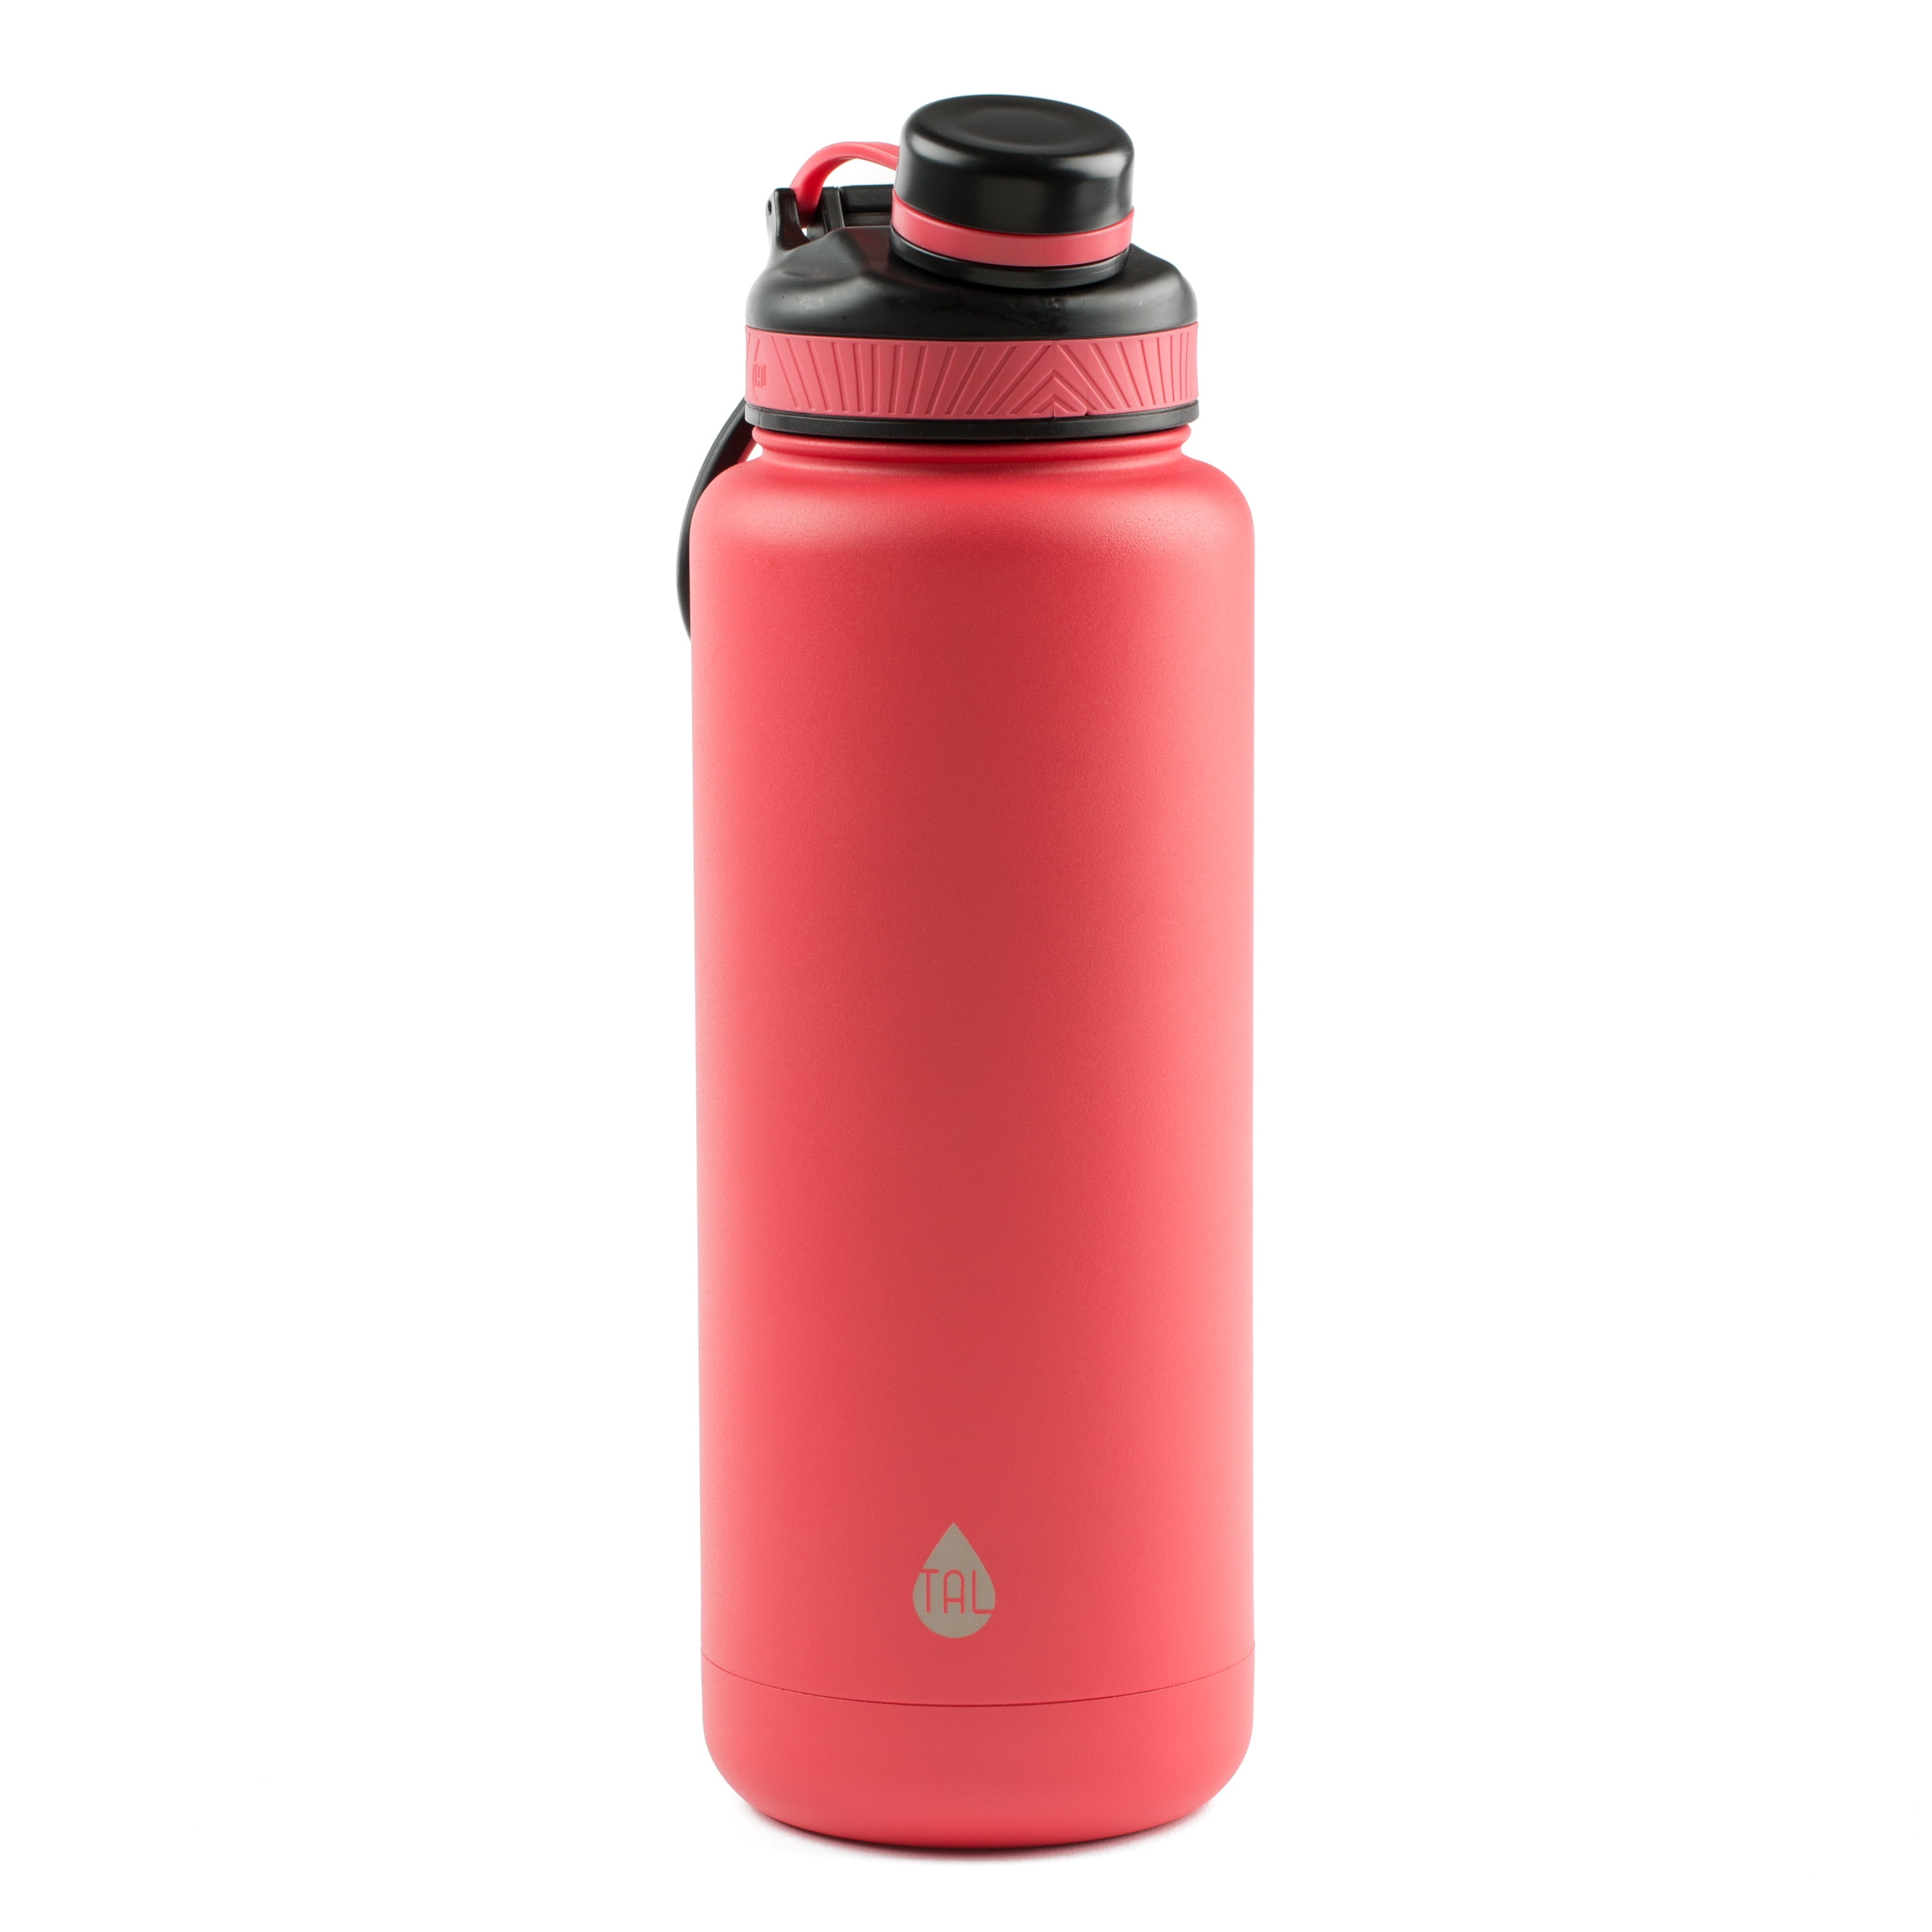 TAL Stainless Steel Ranger Water Bottle 26 oz, Bright Pink - Yahoo